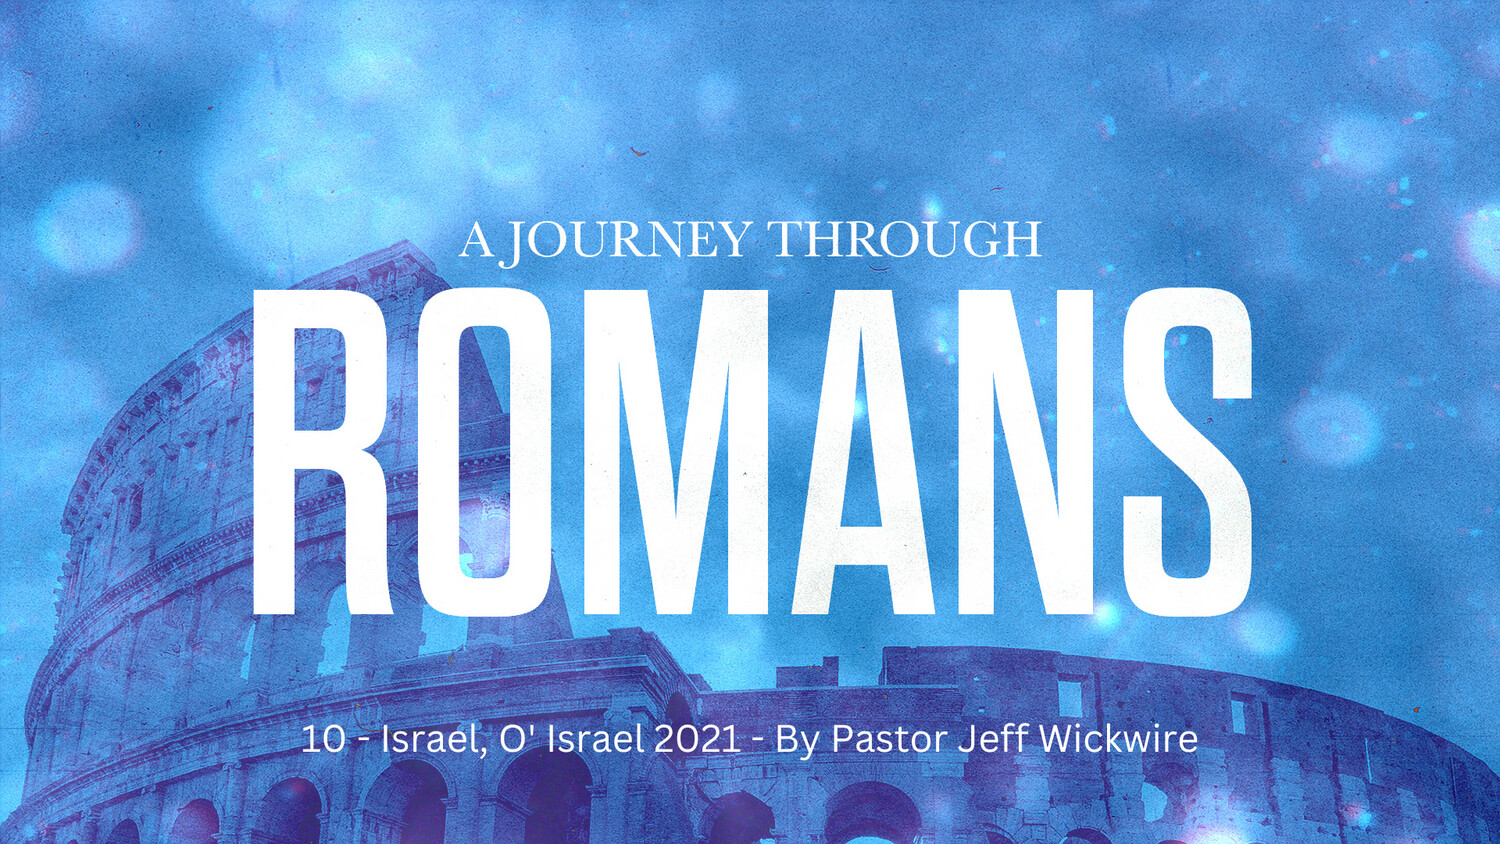 10 - Israel, O' Israel 2021 - By Pastor Jeff Wickwire